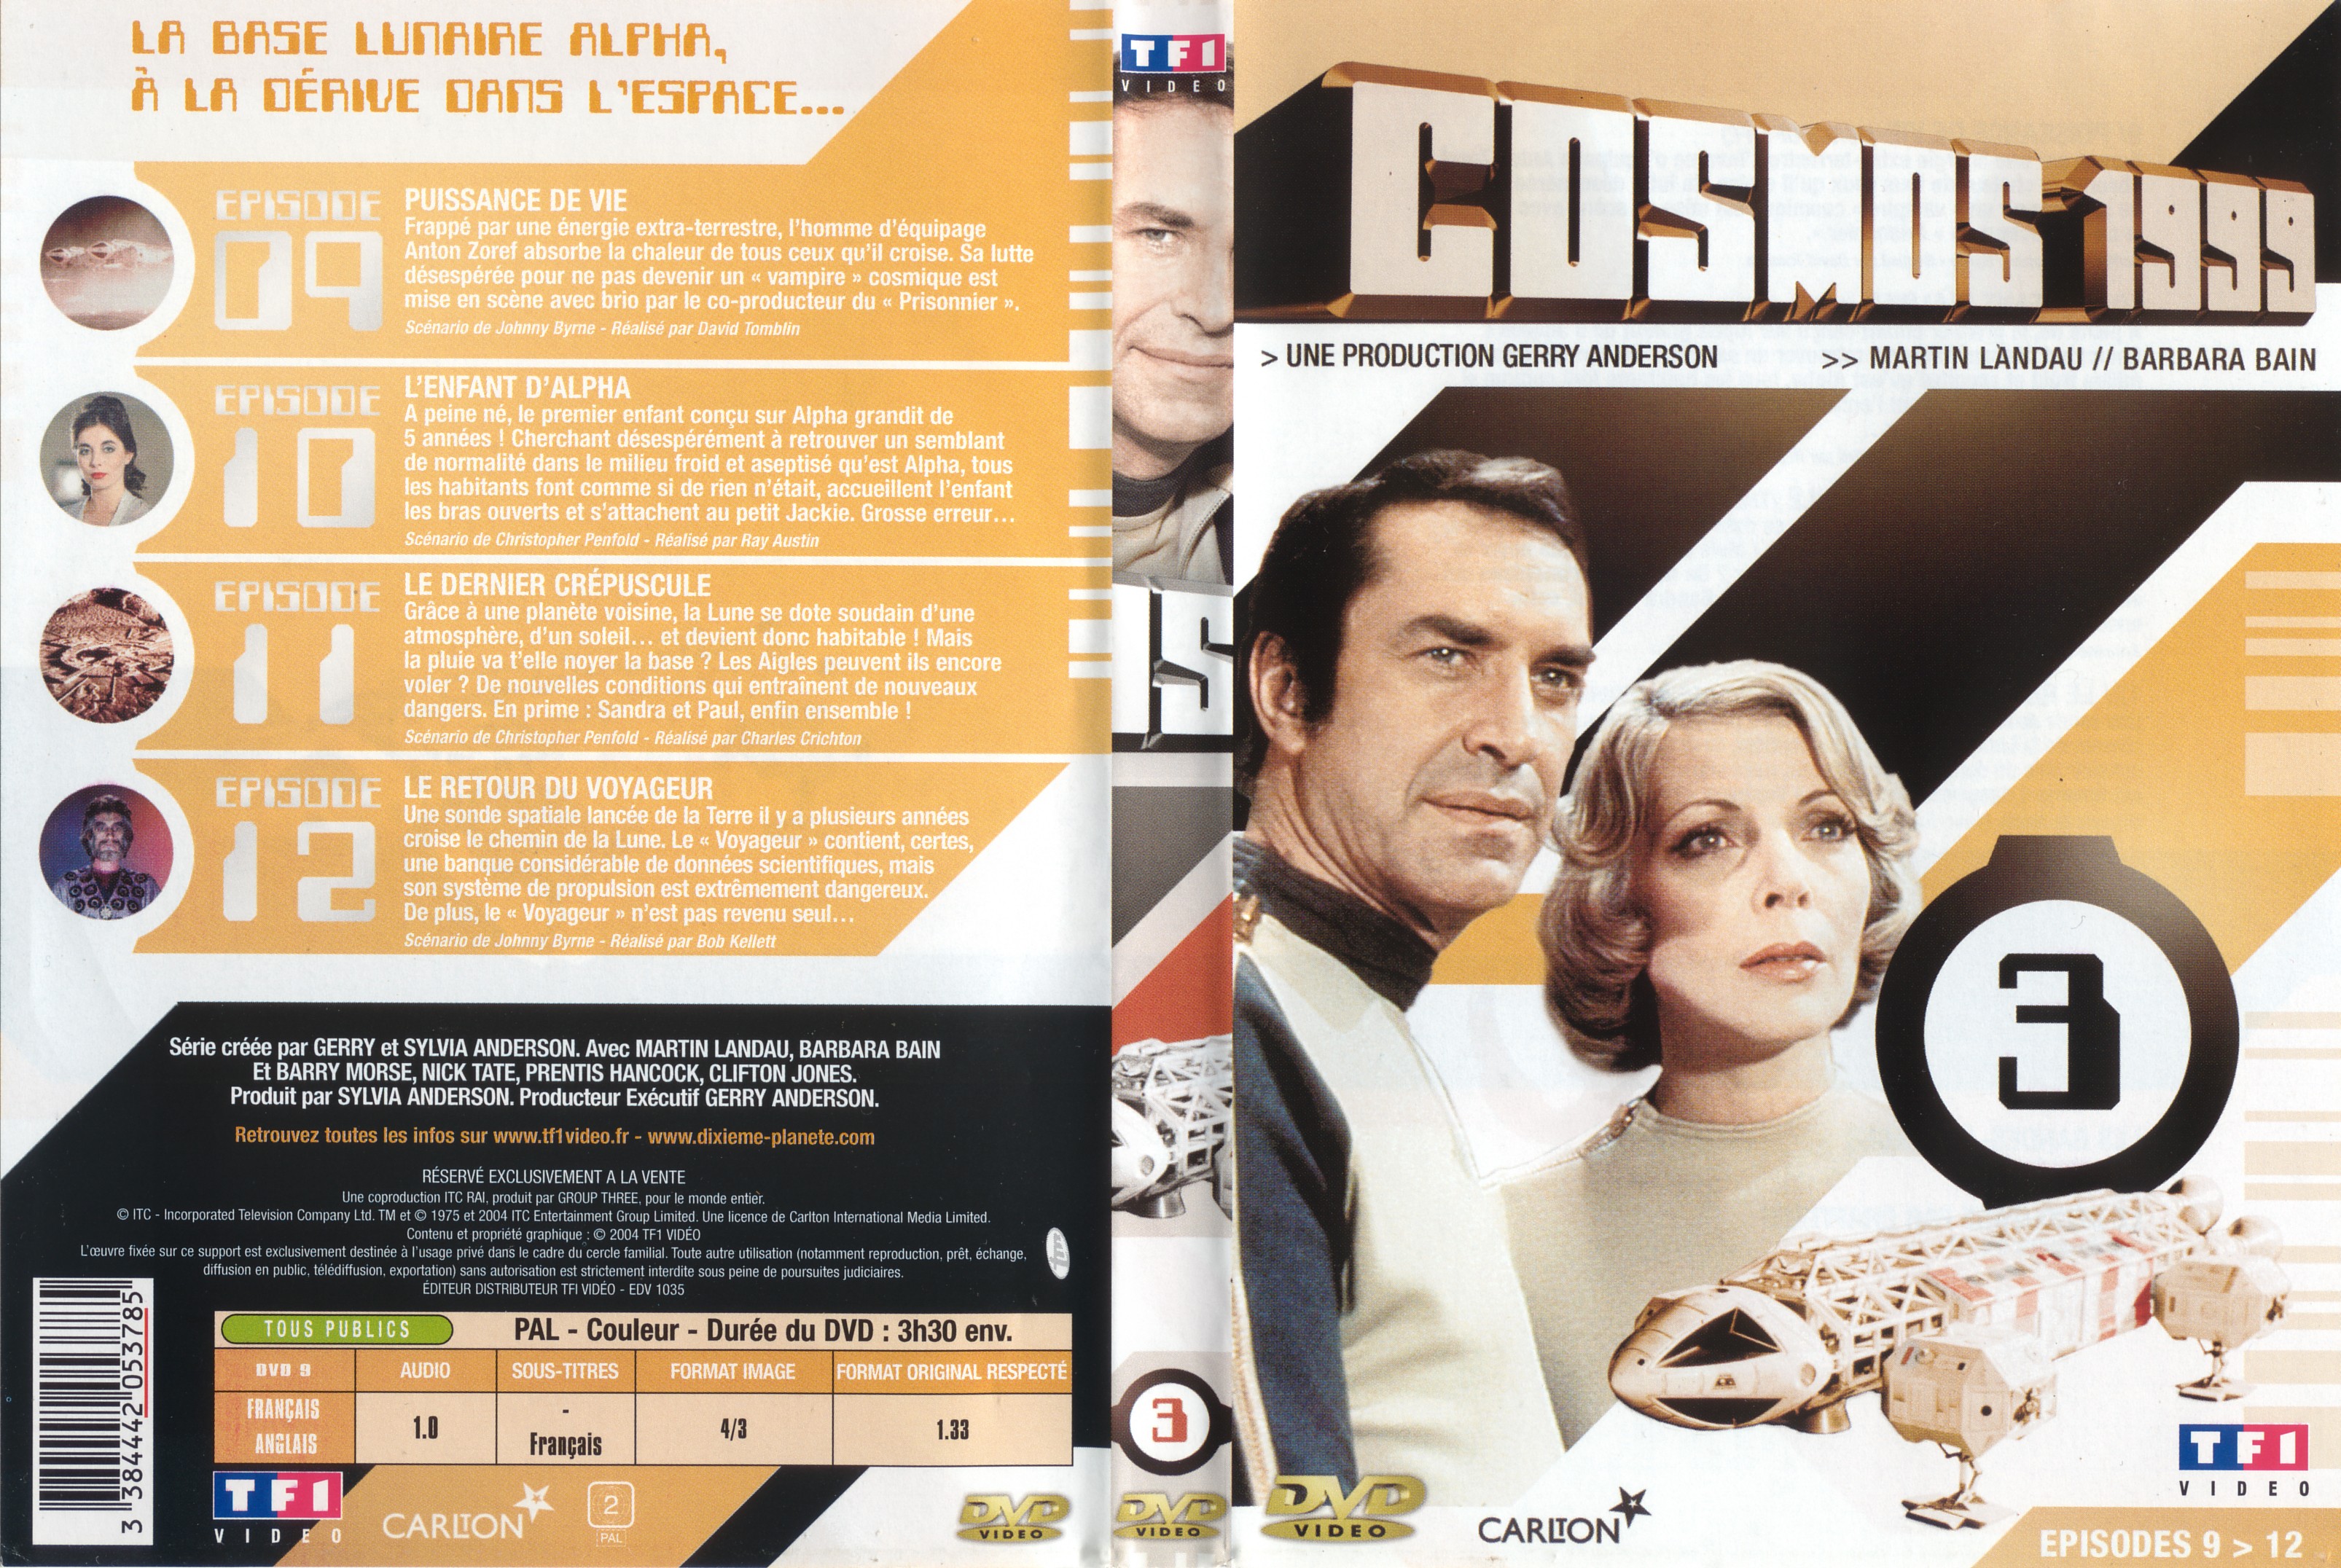 Jaquette DVD Cosmos 1999 saison 1 dvd 3